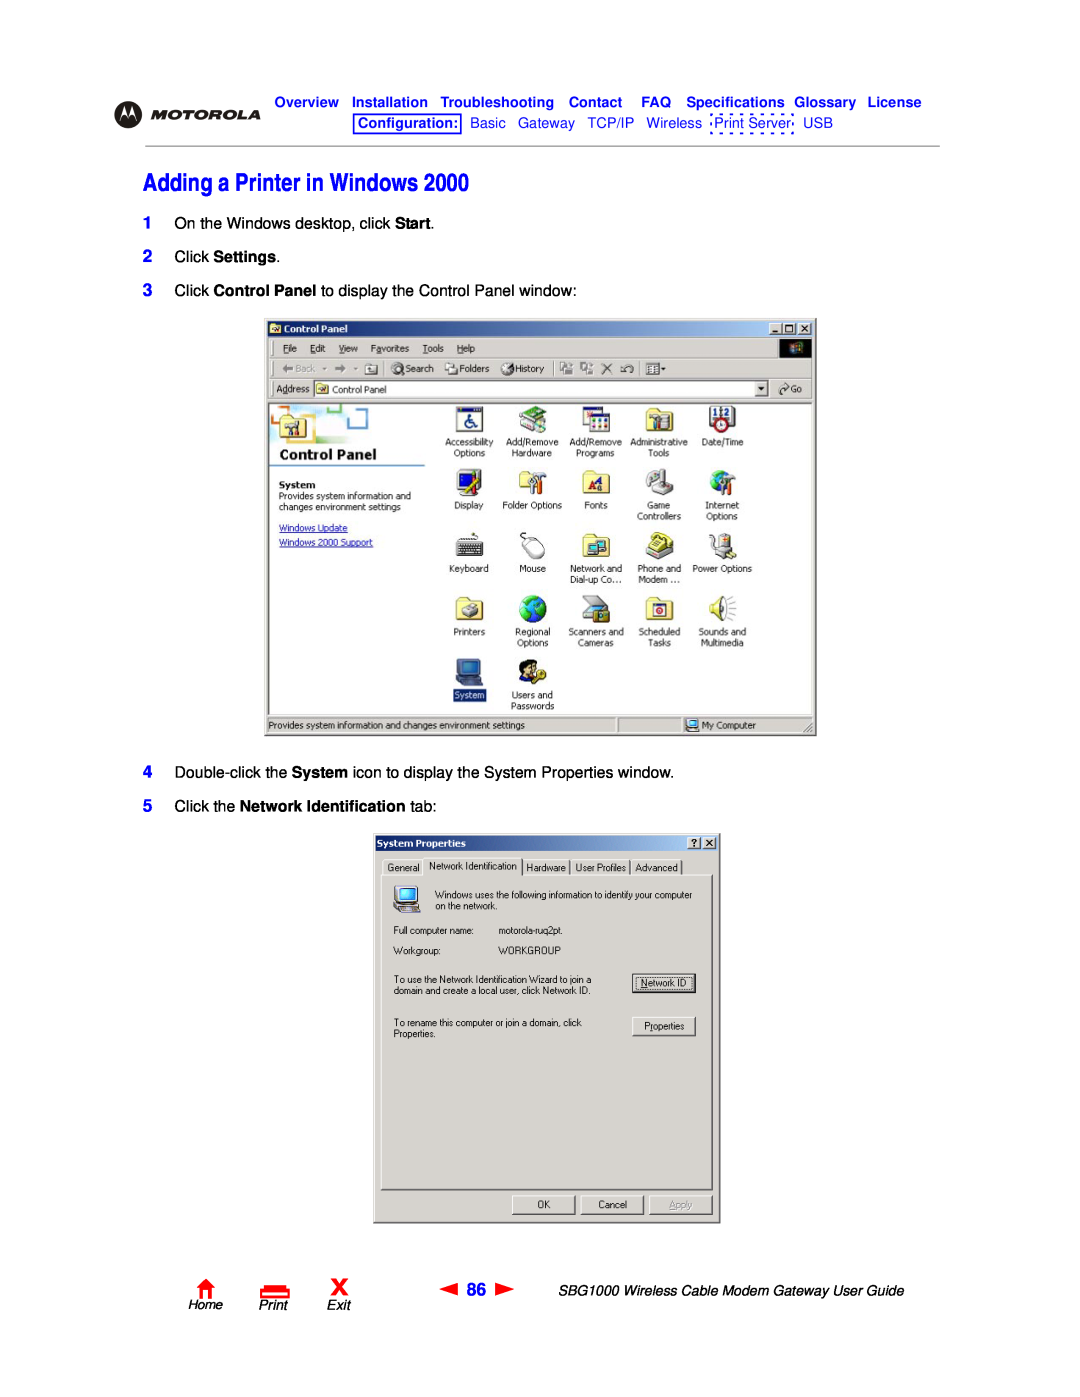 Motorola SBG1000 manual Adding a Printer in Windows, Click the Network Identification tab, Click Settings, Home Print Exit 